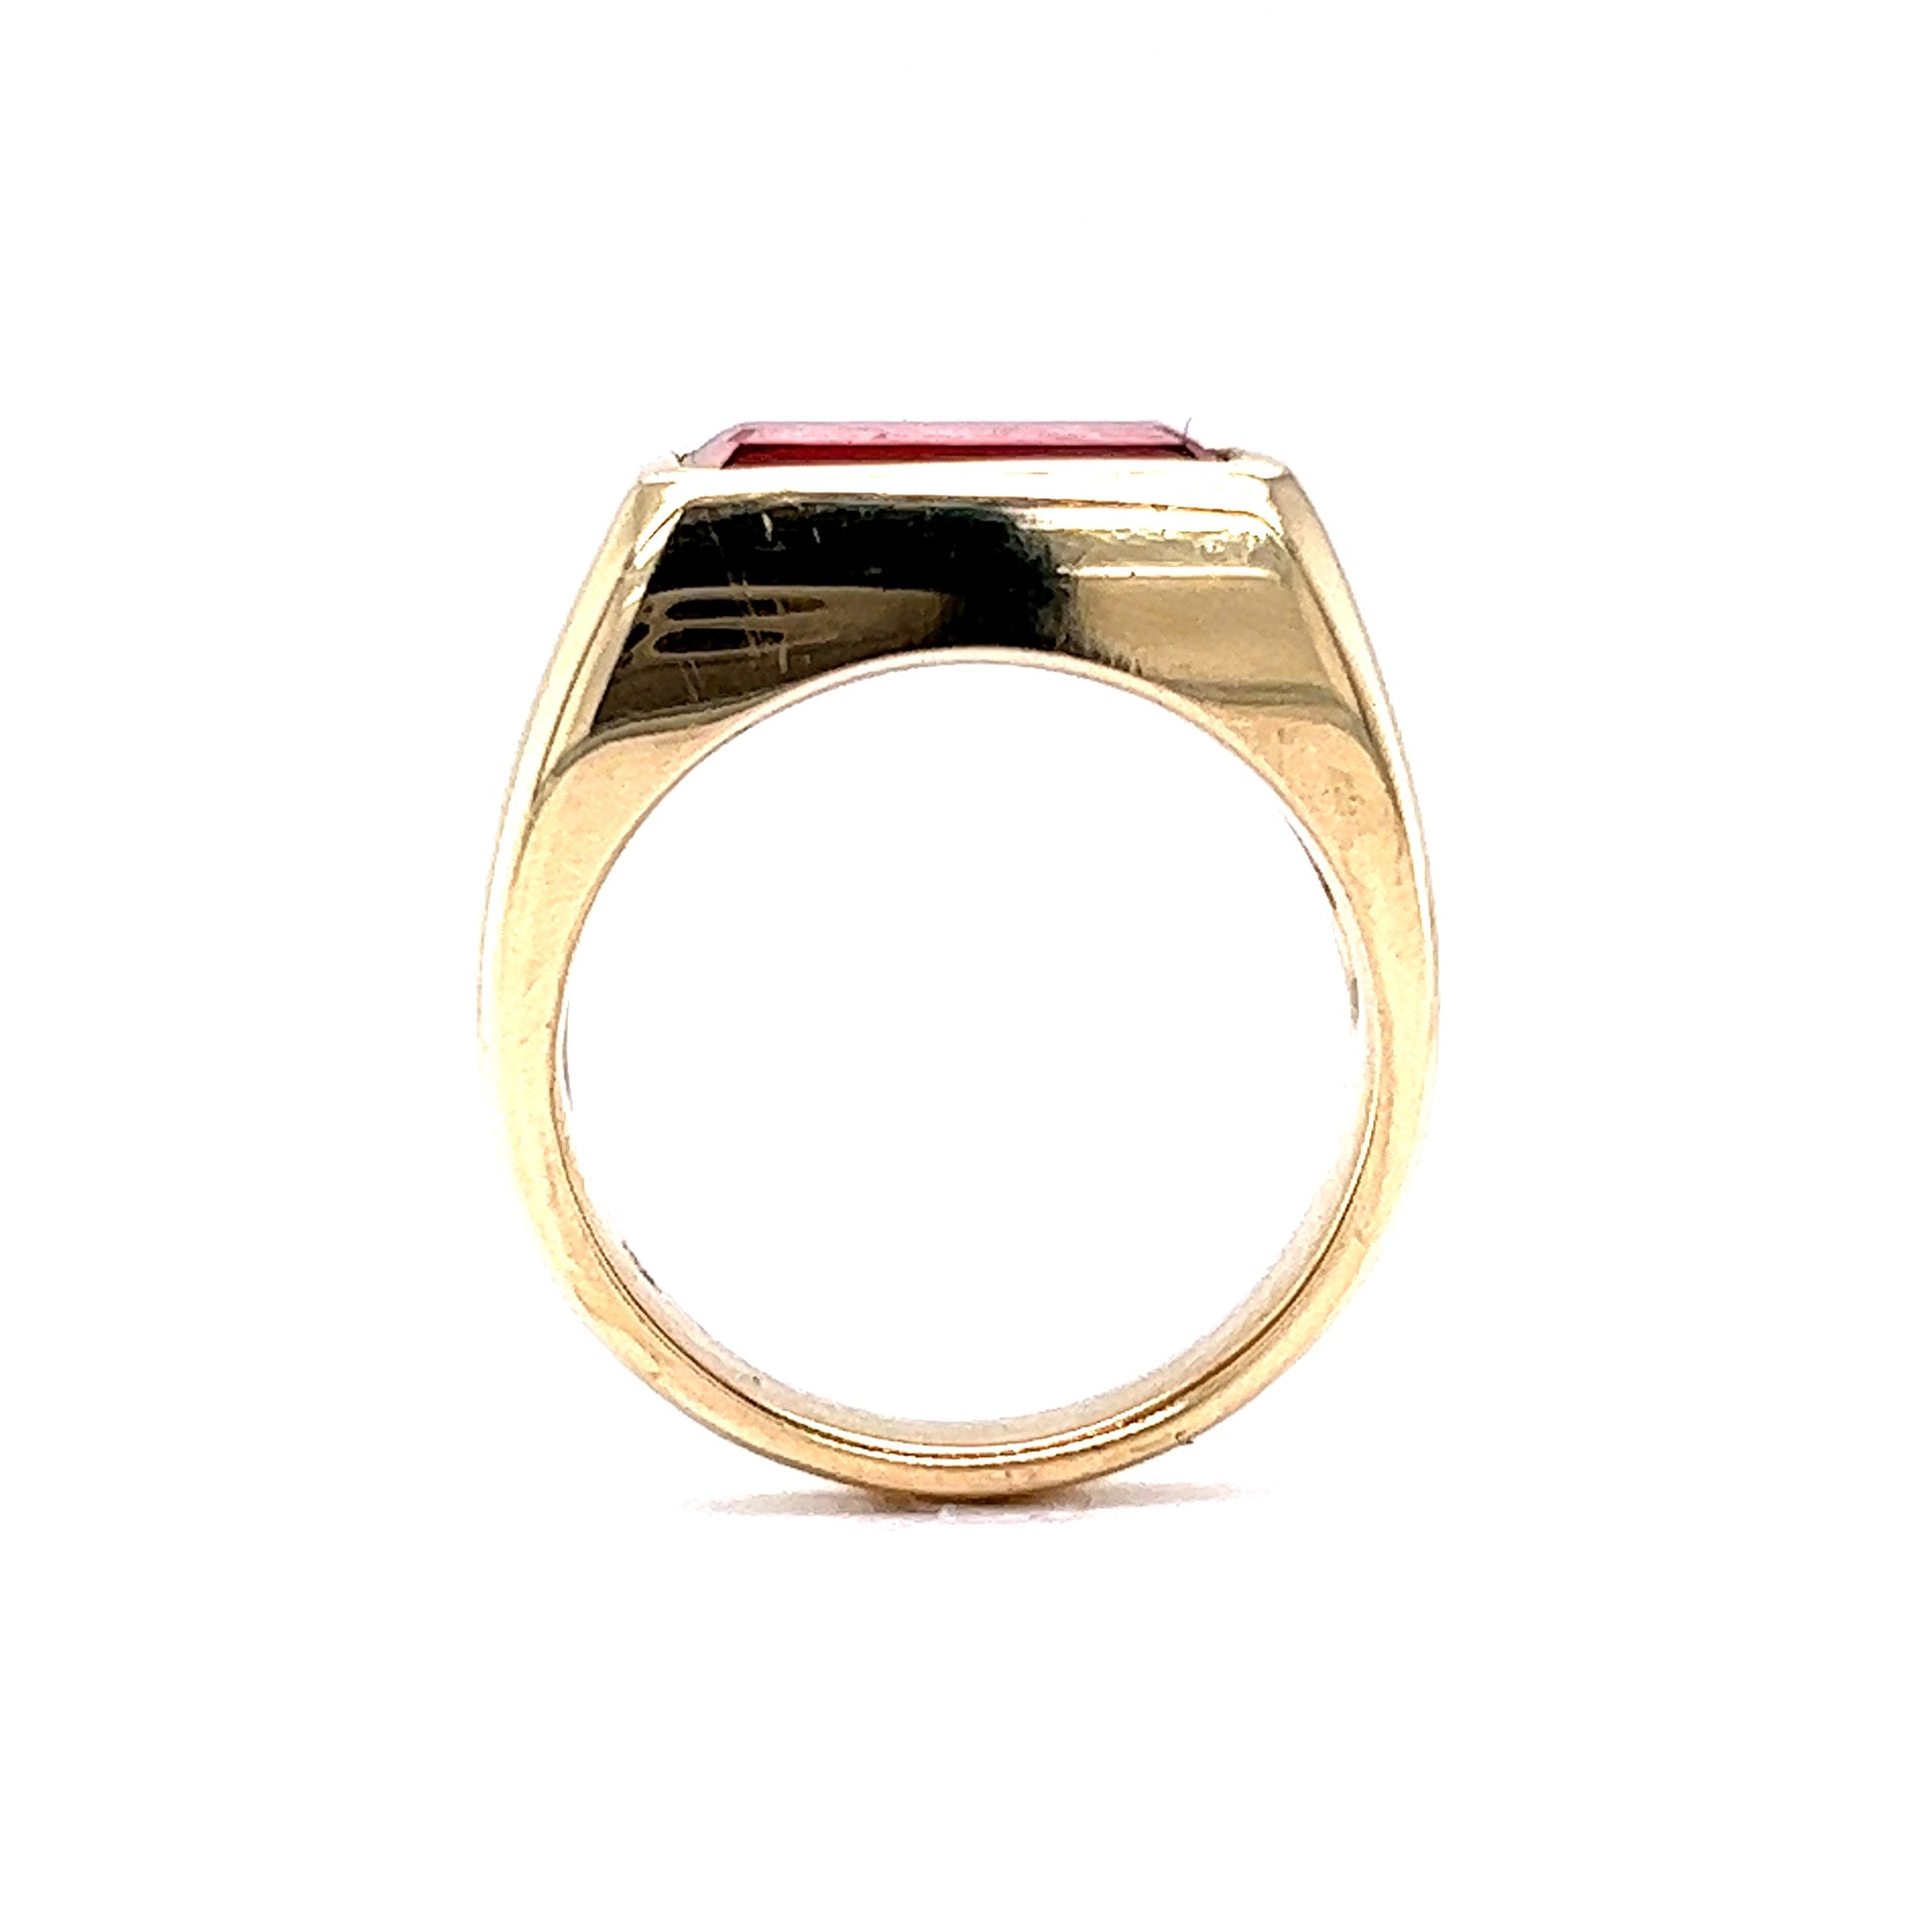 Bezel Set Garnet Cocktail Ring in 14k Yellow GoldComposition: 14 Karat Yellow Gold Ring Size: 6.5 Total Gram Weight: 9.5 g Inscription: 14k
      